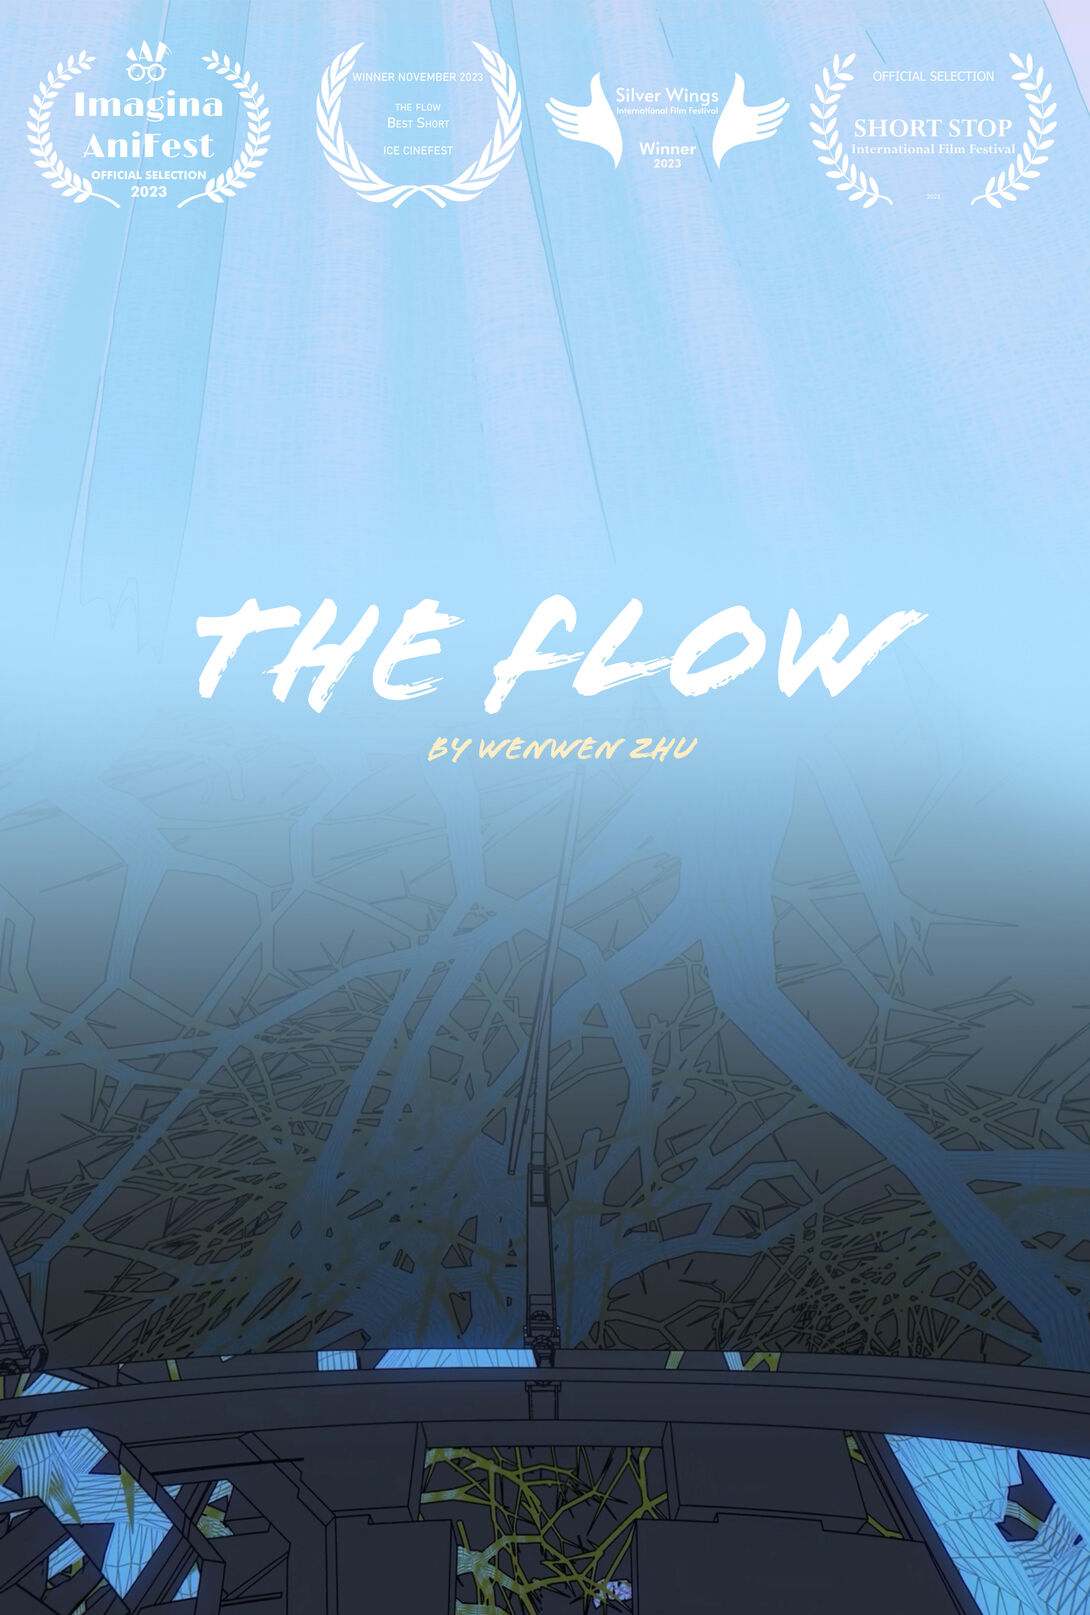 'The Flow' by Wenwen Zhu, created using SAIC's render farm